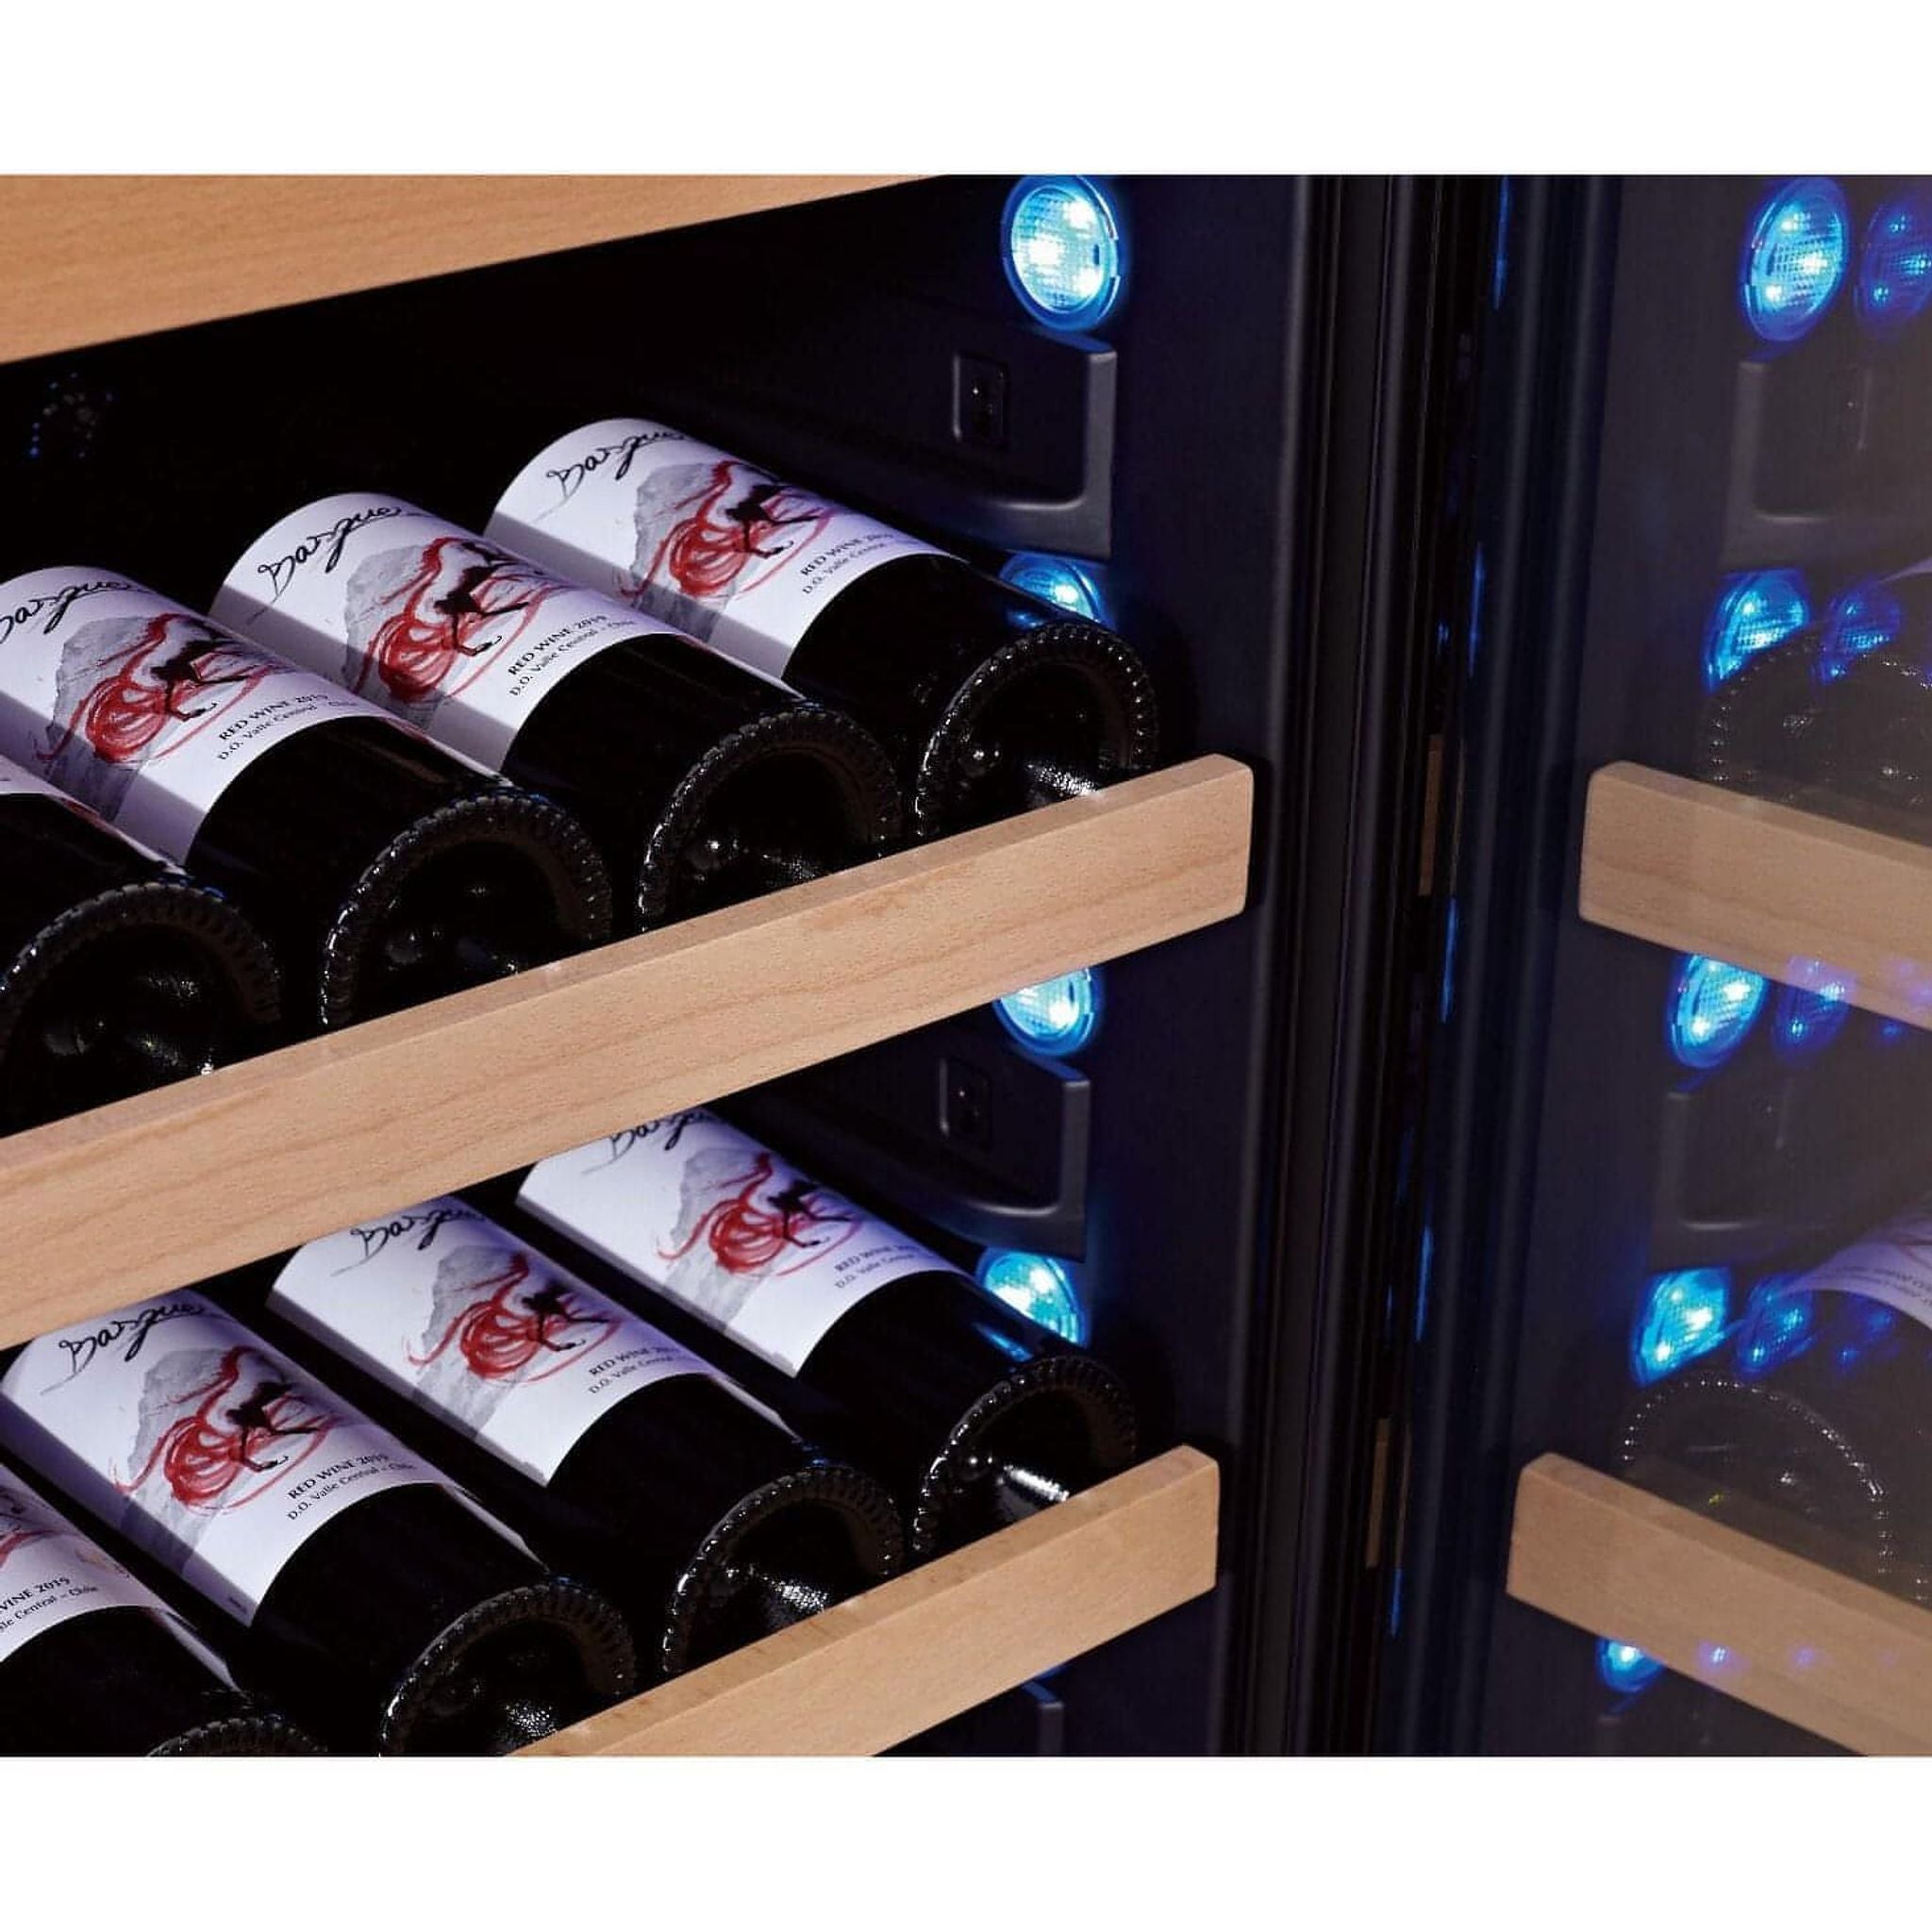 SWISSCAVE Premium - 600mm - 110 Bottle - Freestanding / Built in Wine Cooler - WLB-360F-MIX